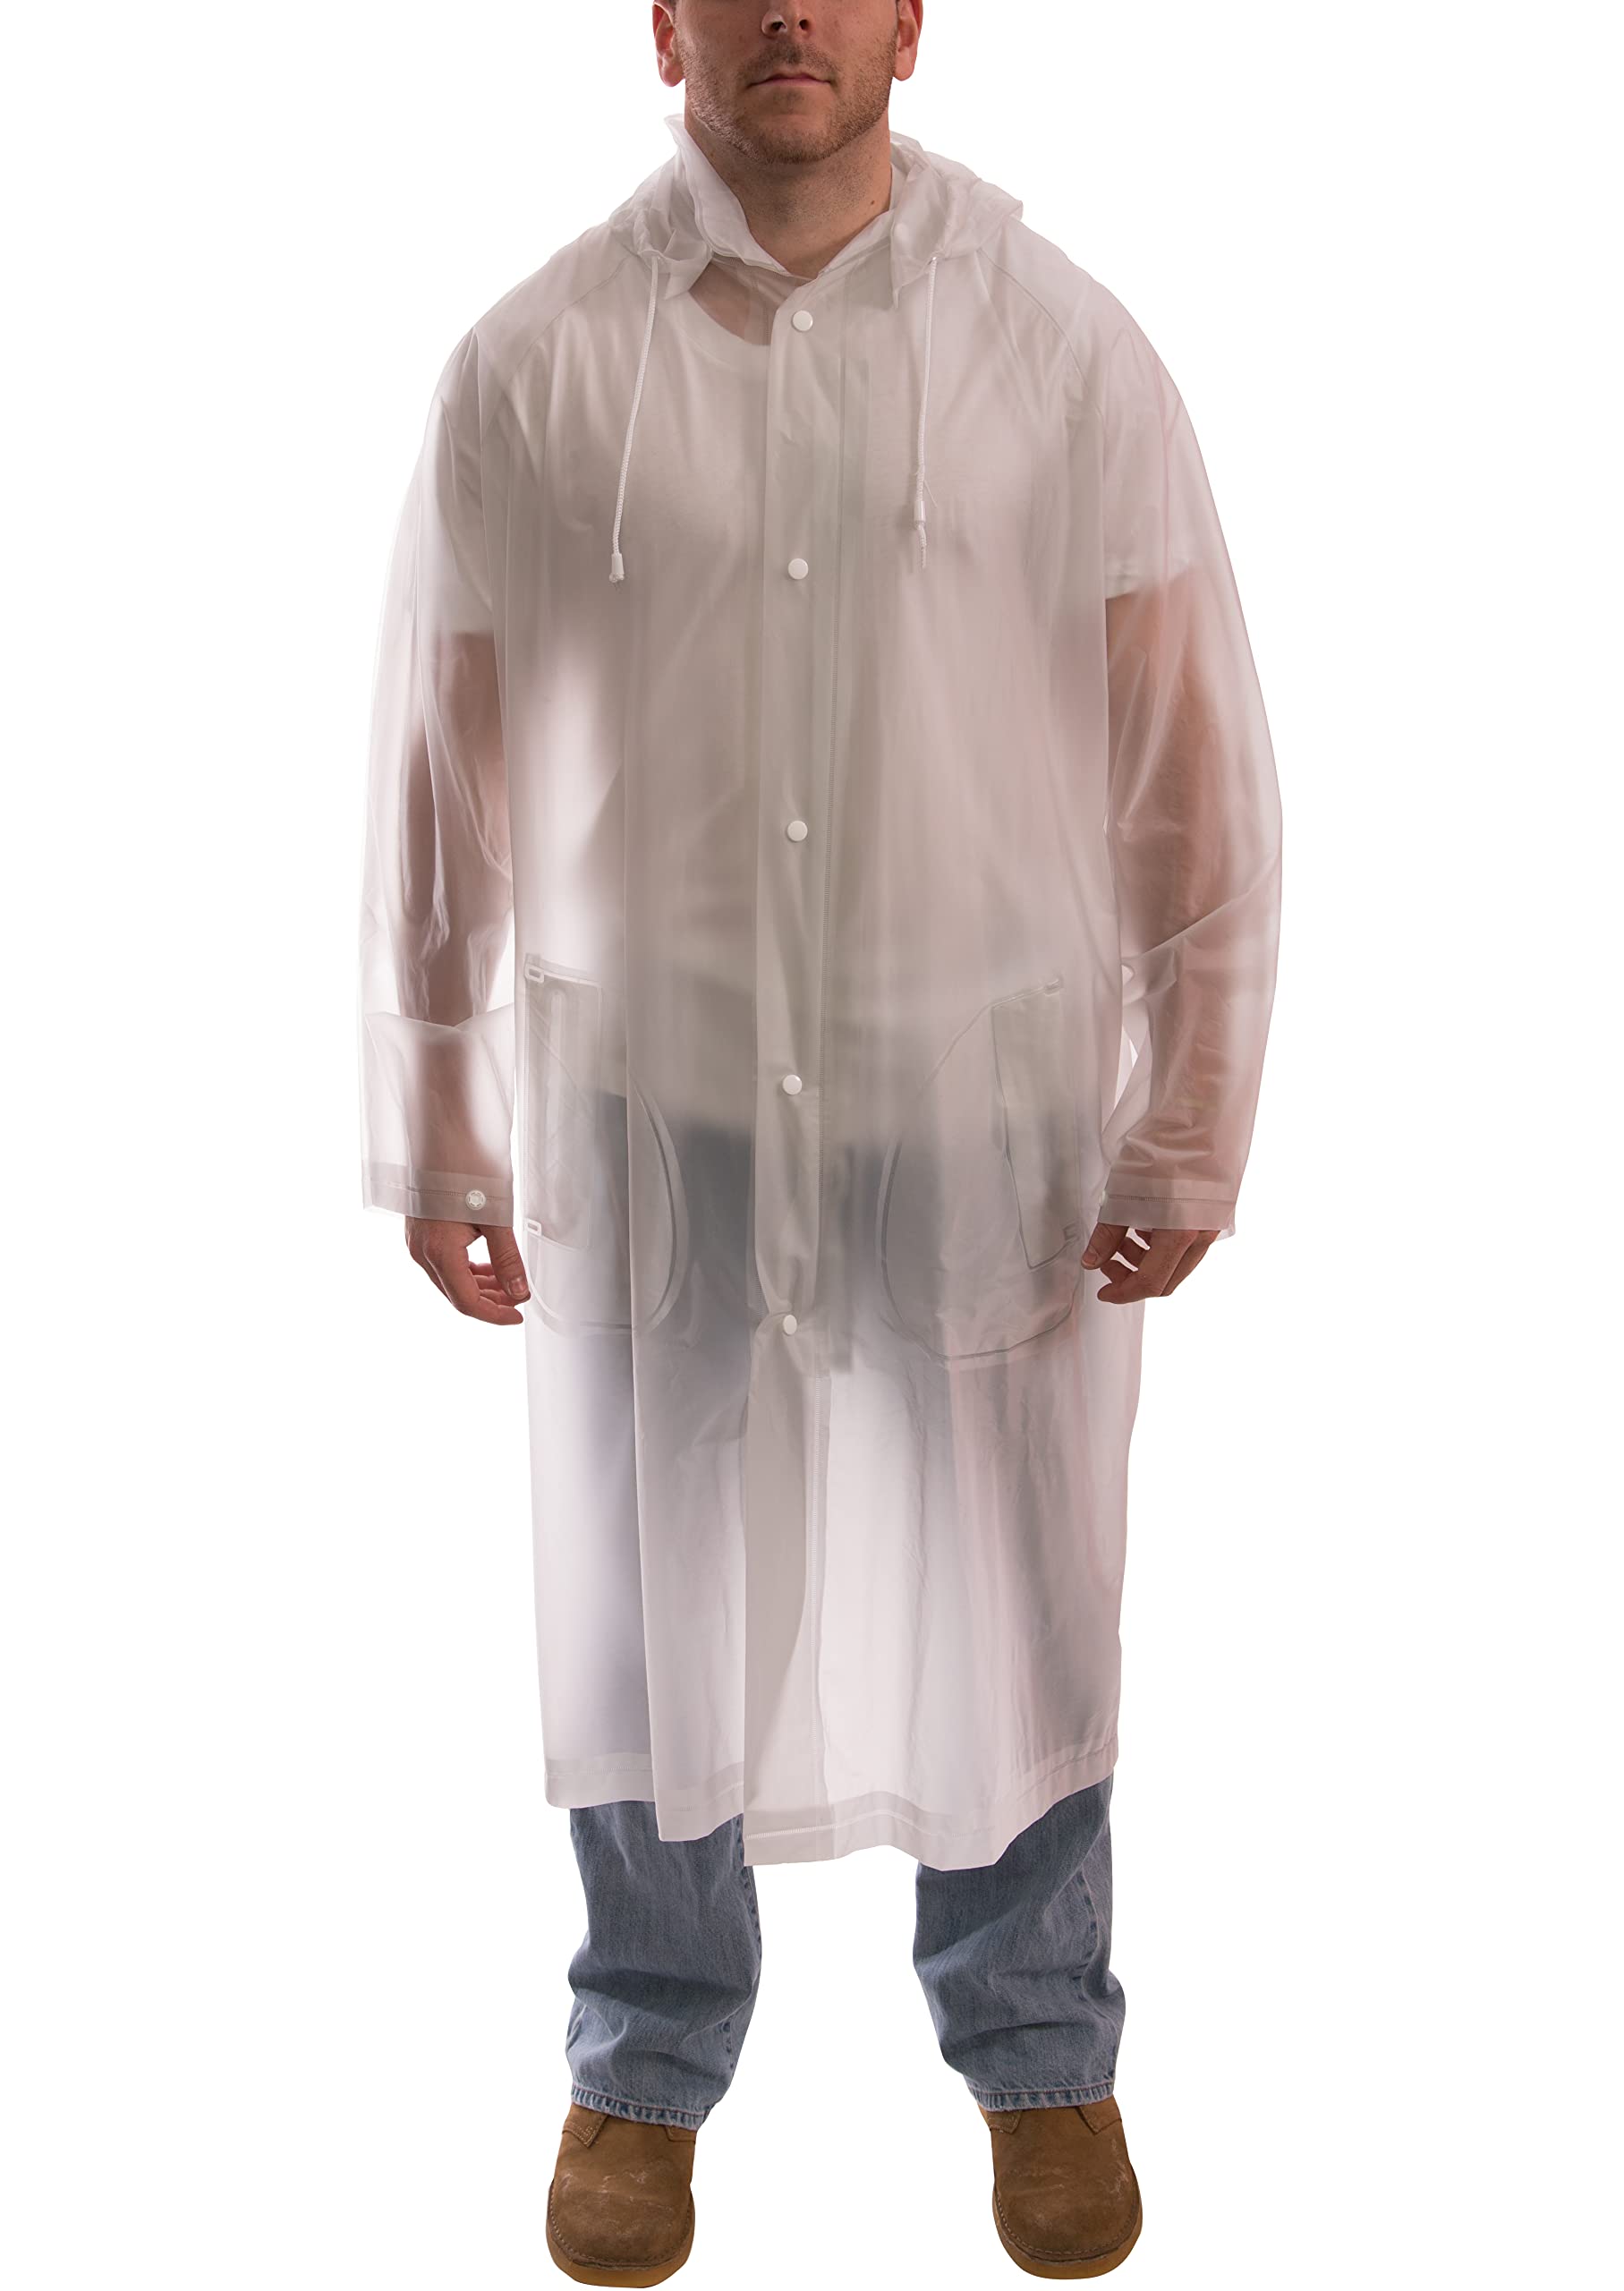 Tingley Men's Standard Rain Coat with Detachable Hood